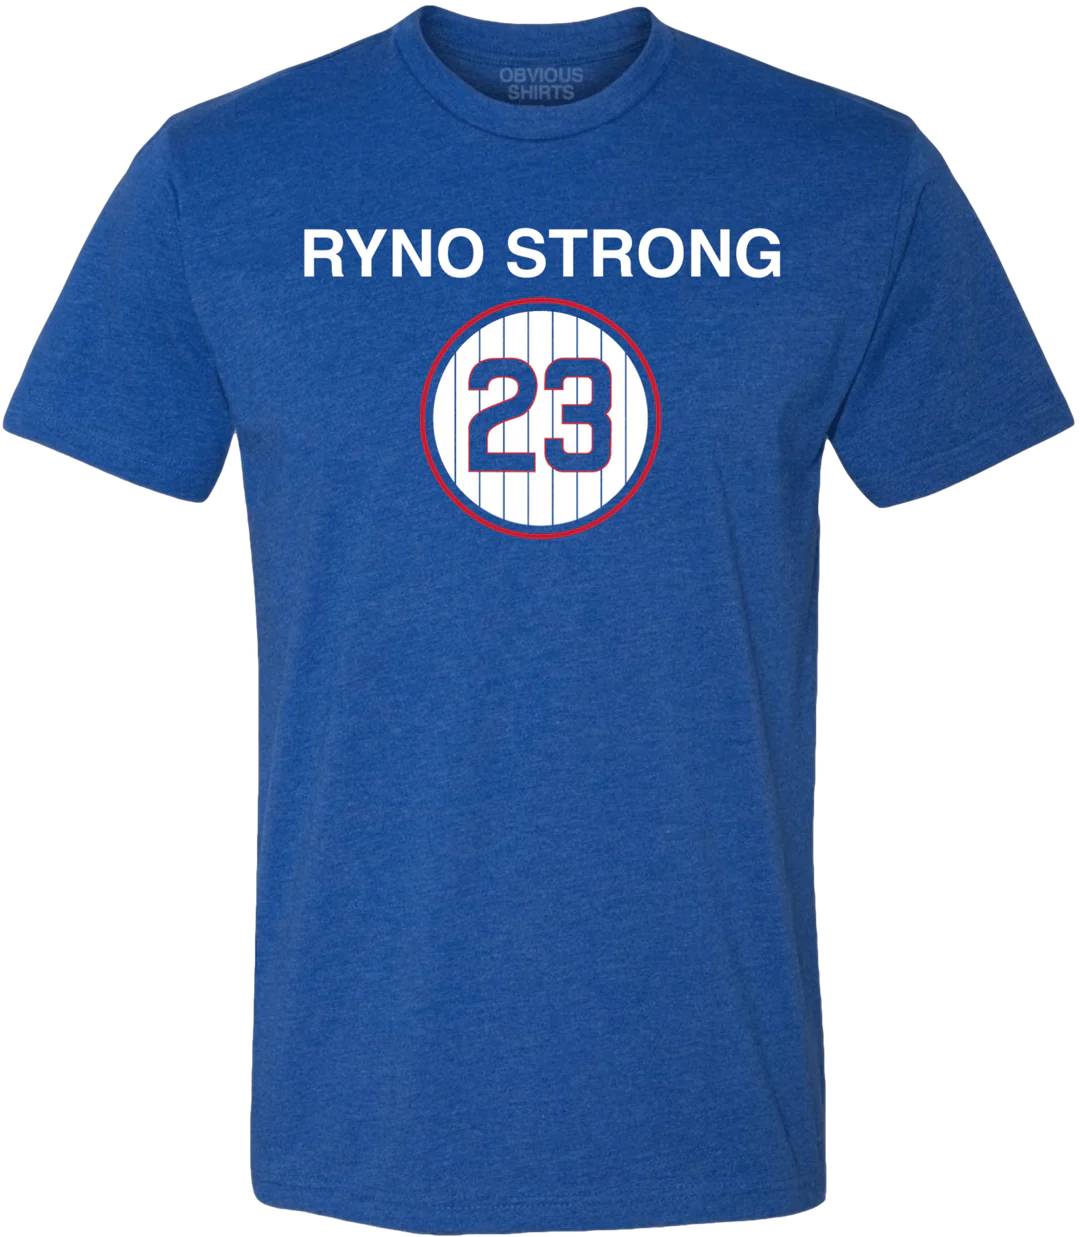 Men's Obvious Shirts Ryne Sandberg Ryno Strong Chicago Cubs Blue Tee